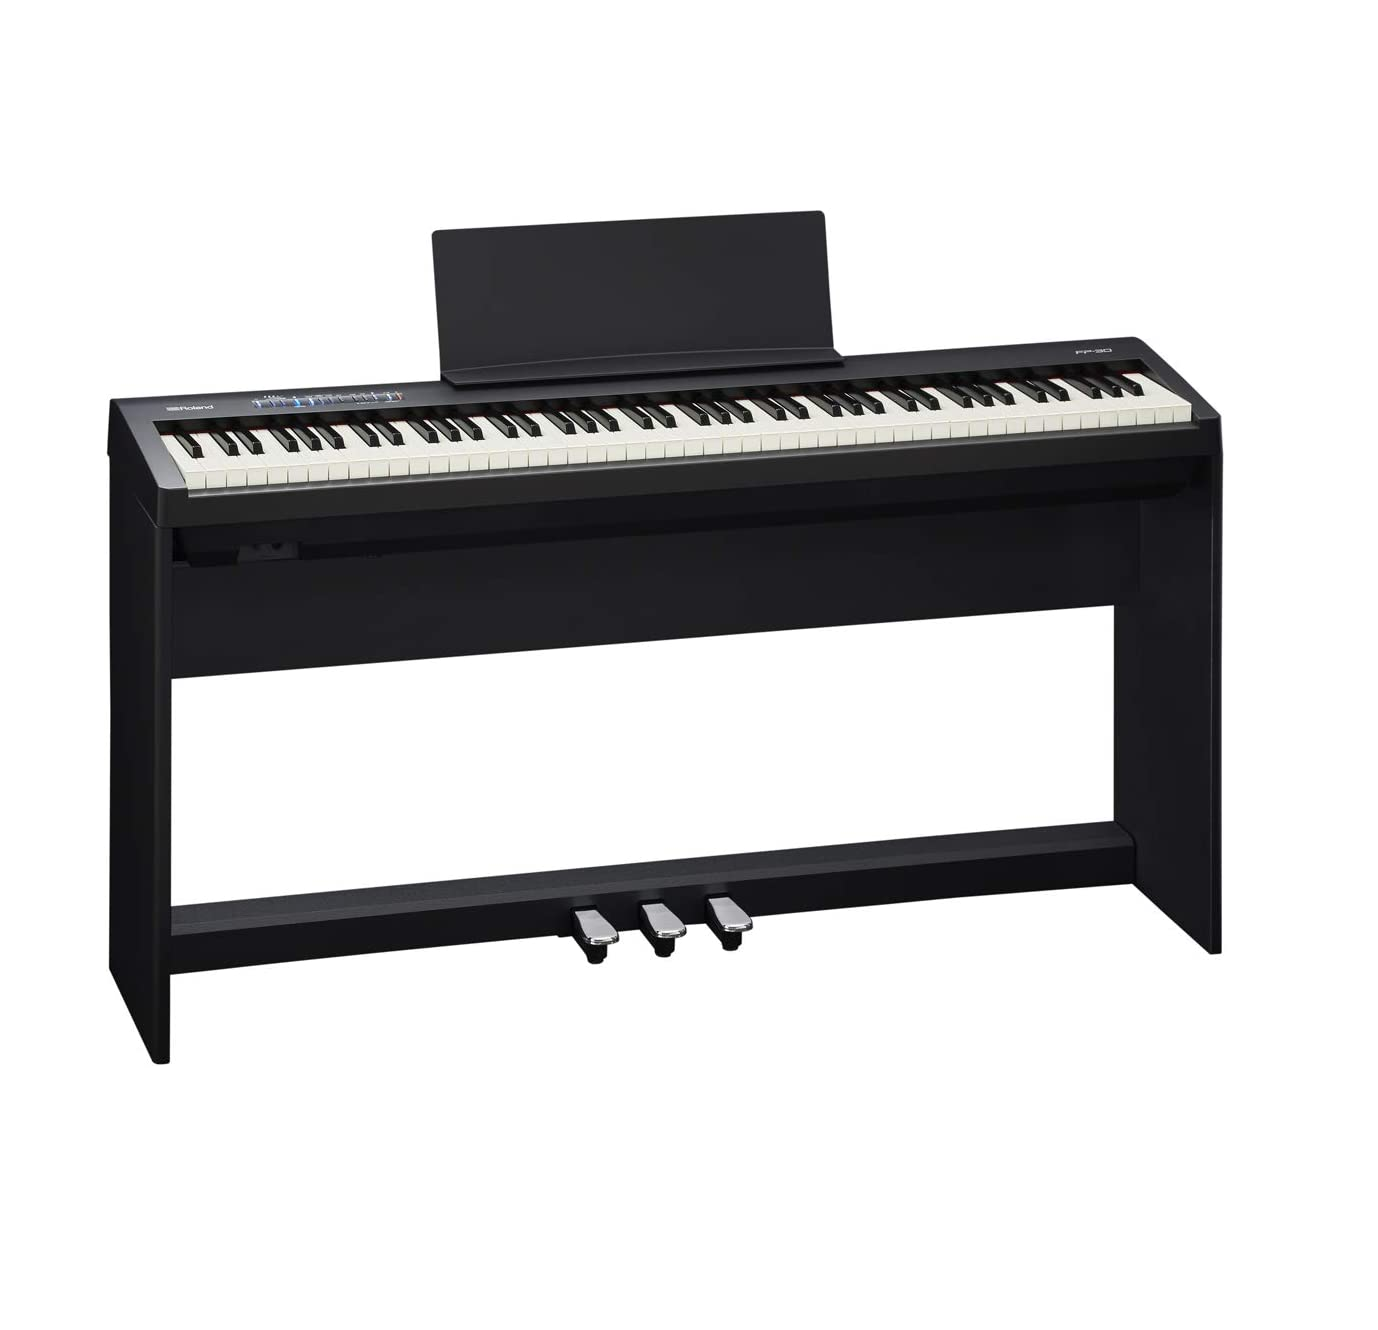 Roland Fp 30x Key Digital Piano The Keyboard Piano Shop